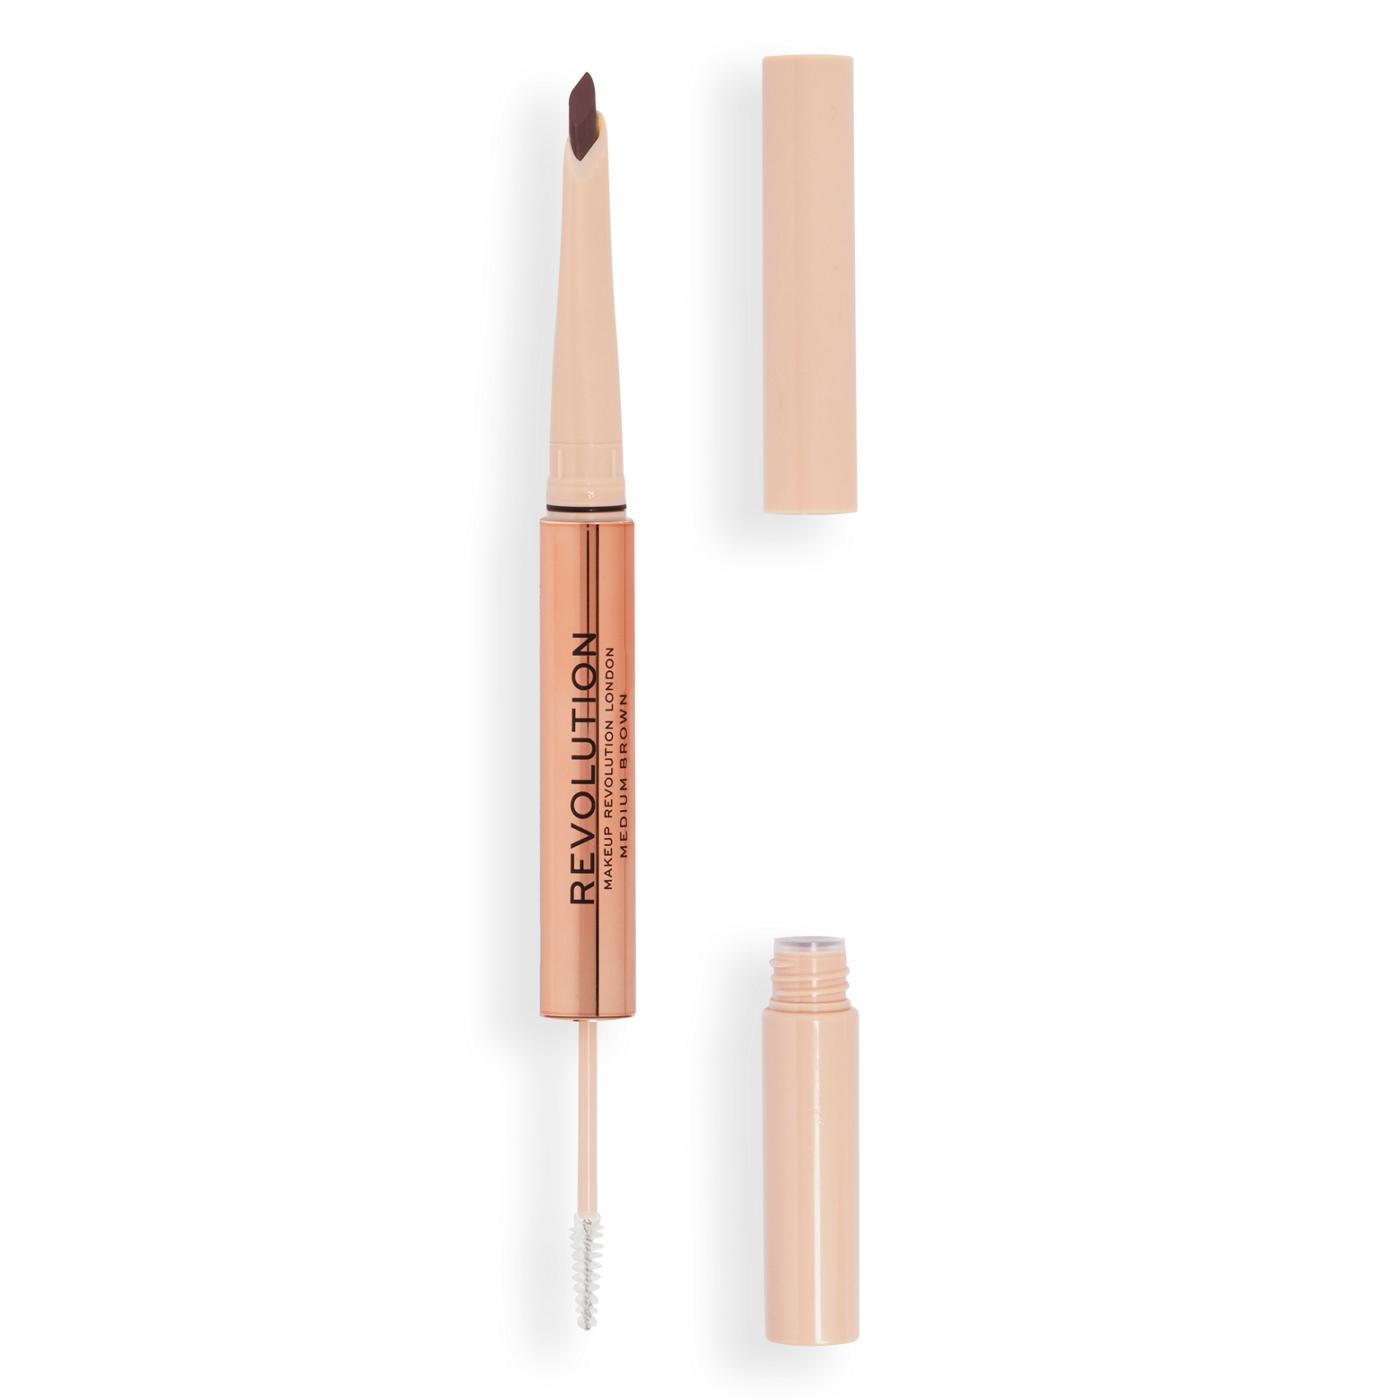 Makeup Revolution Fluffy Brow Duo Pencil - Medium Brown; image 2 of 4